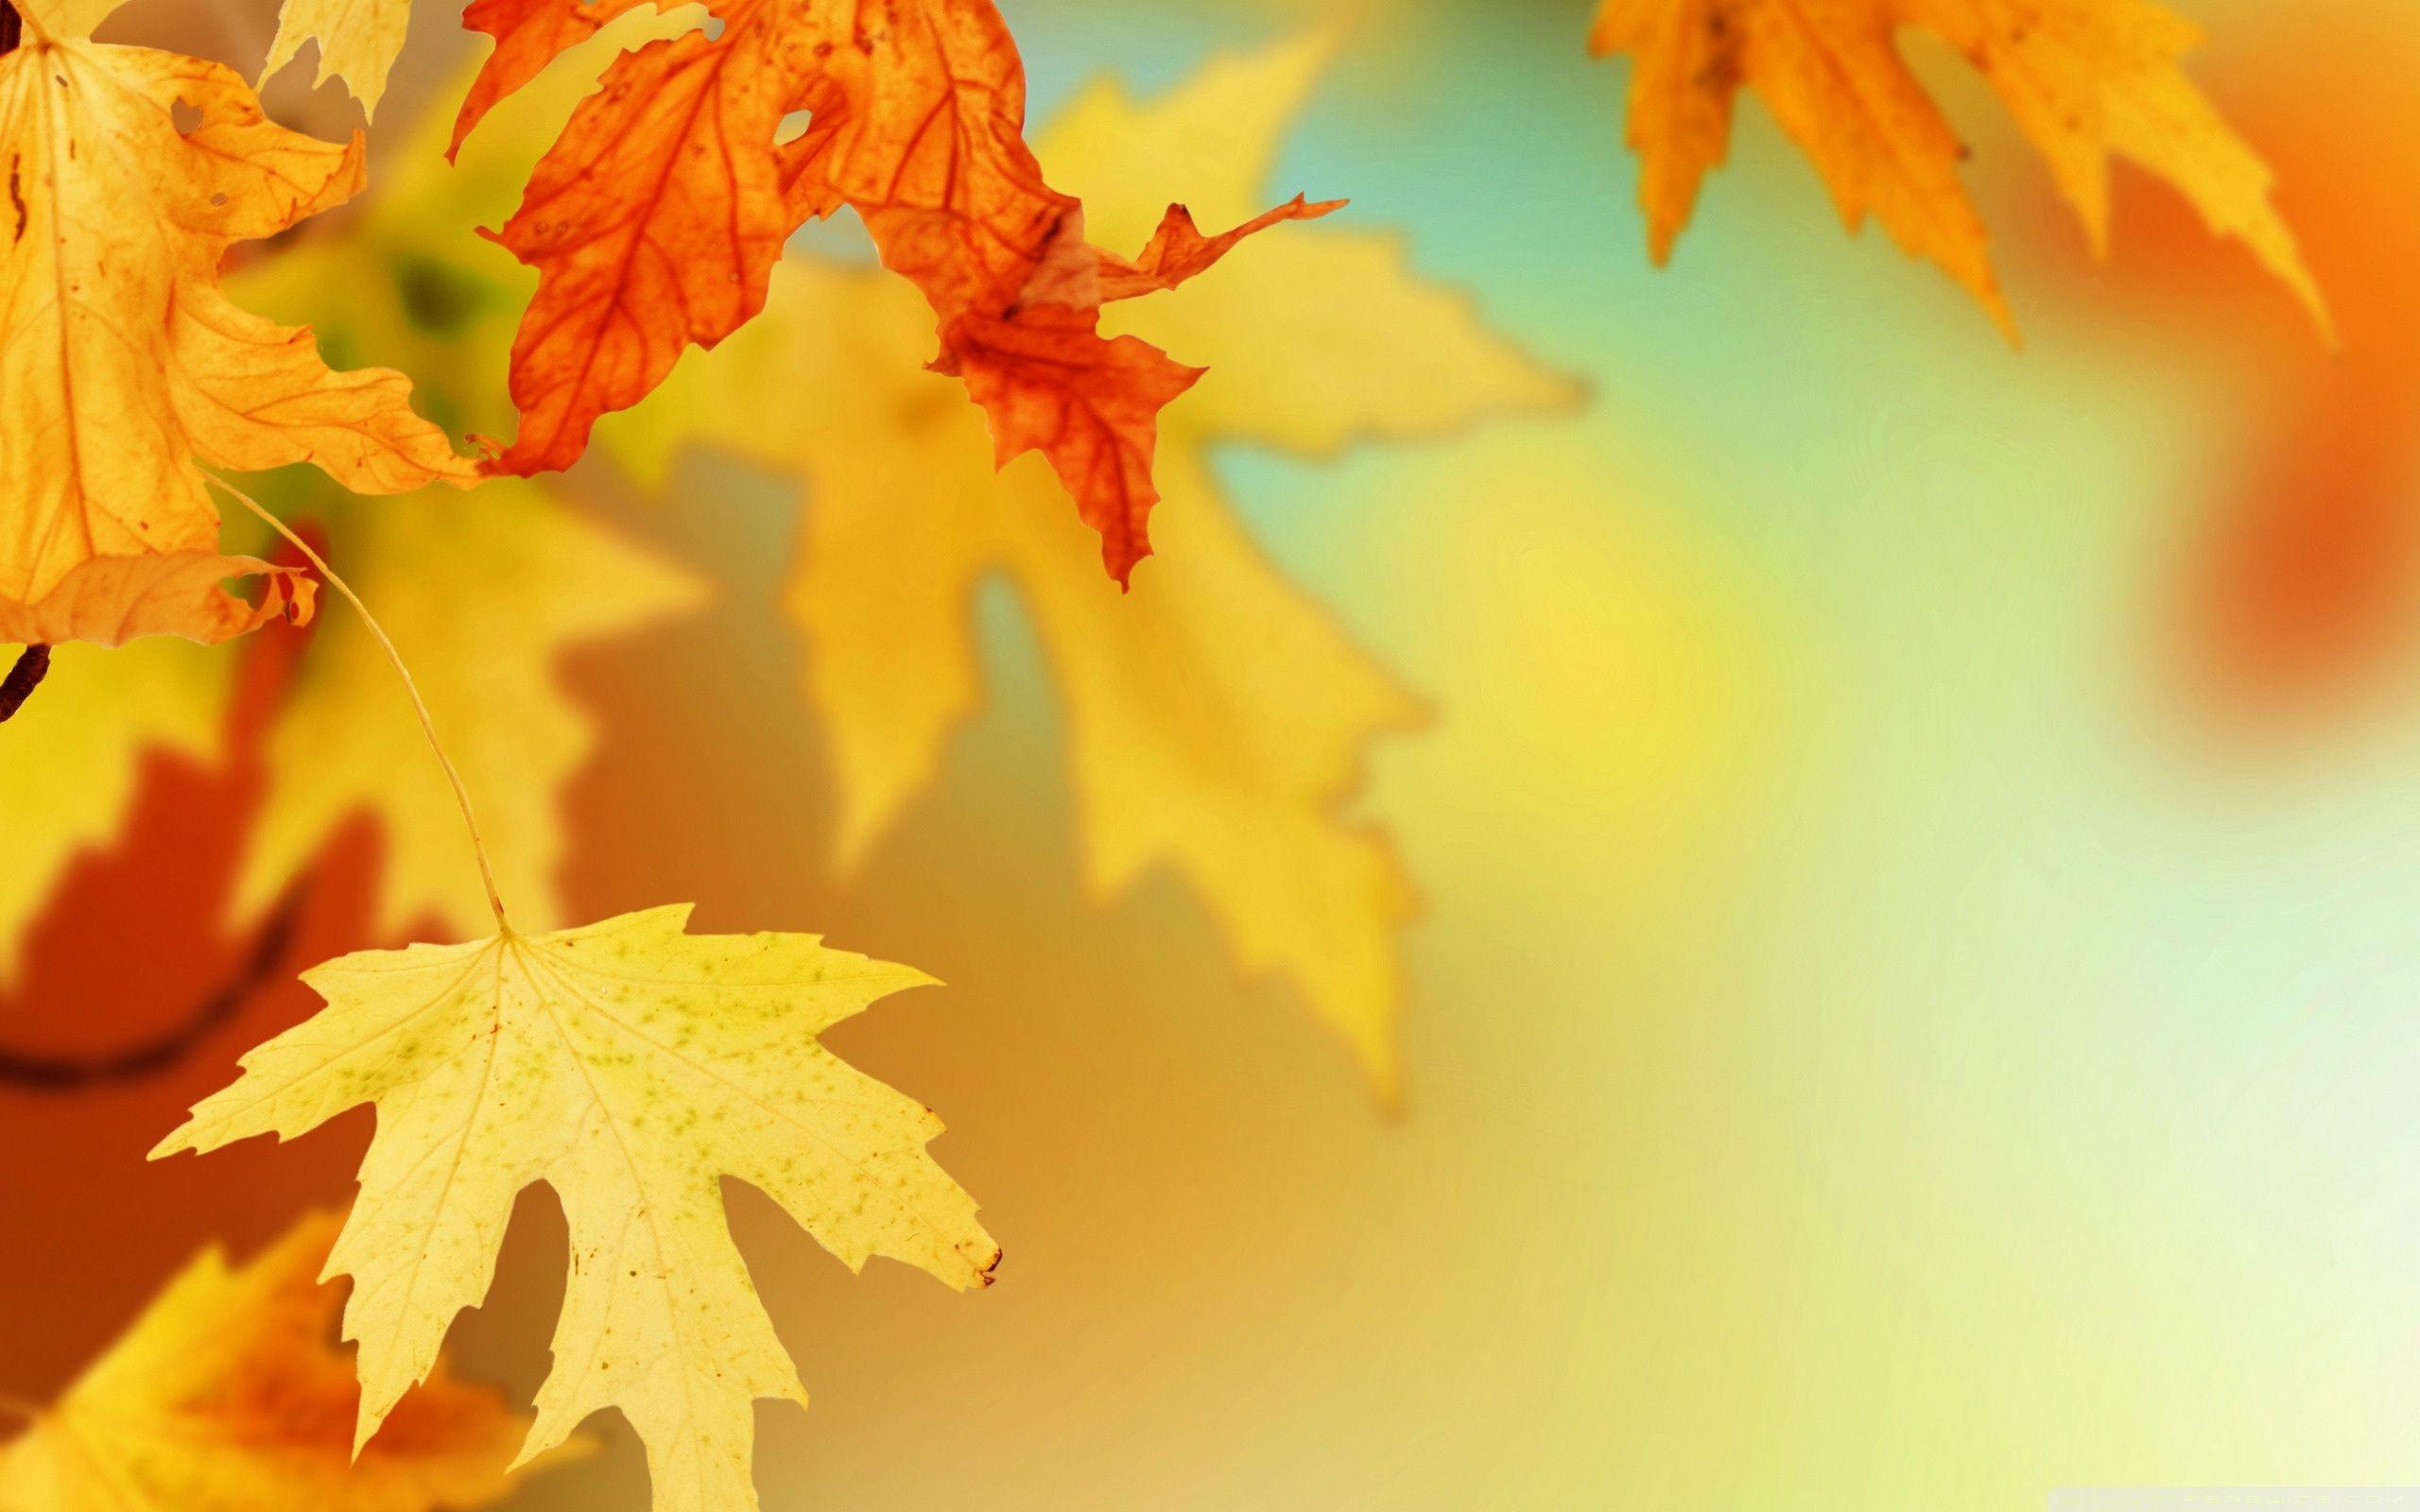 Fall Leaves wallpaperDownload free HD background for desktop